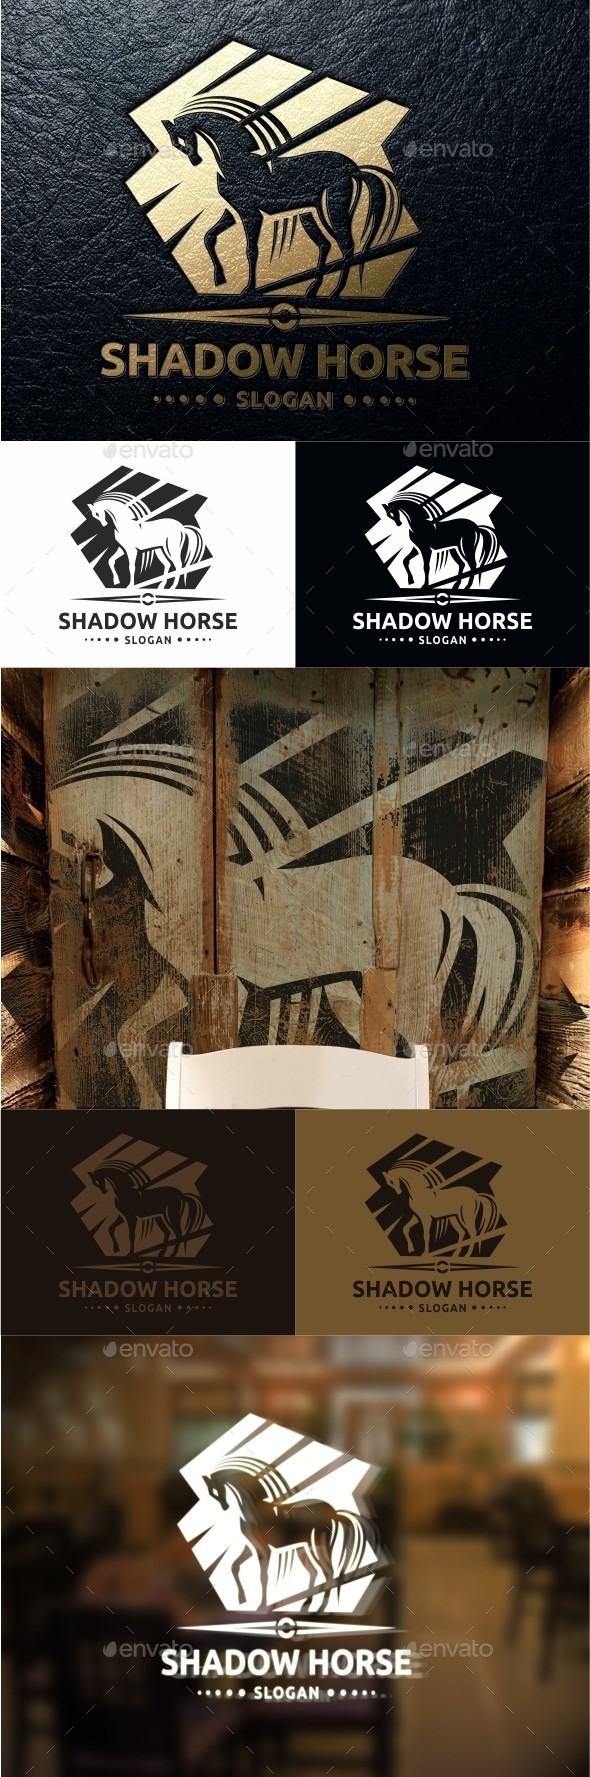 Shadow 20horse